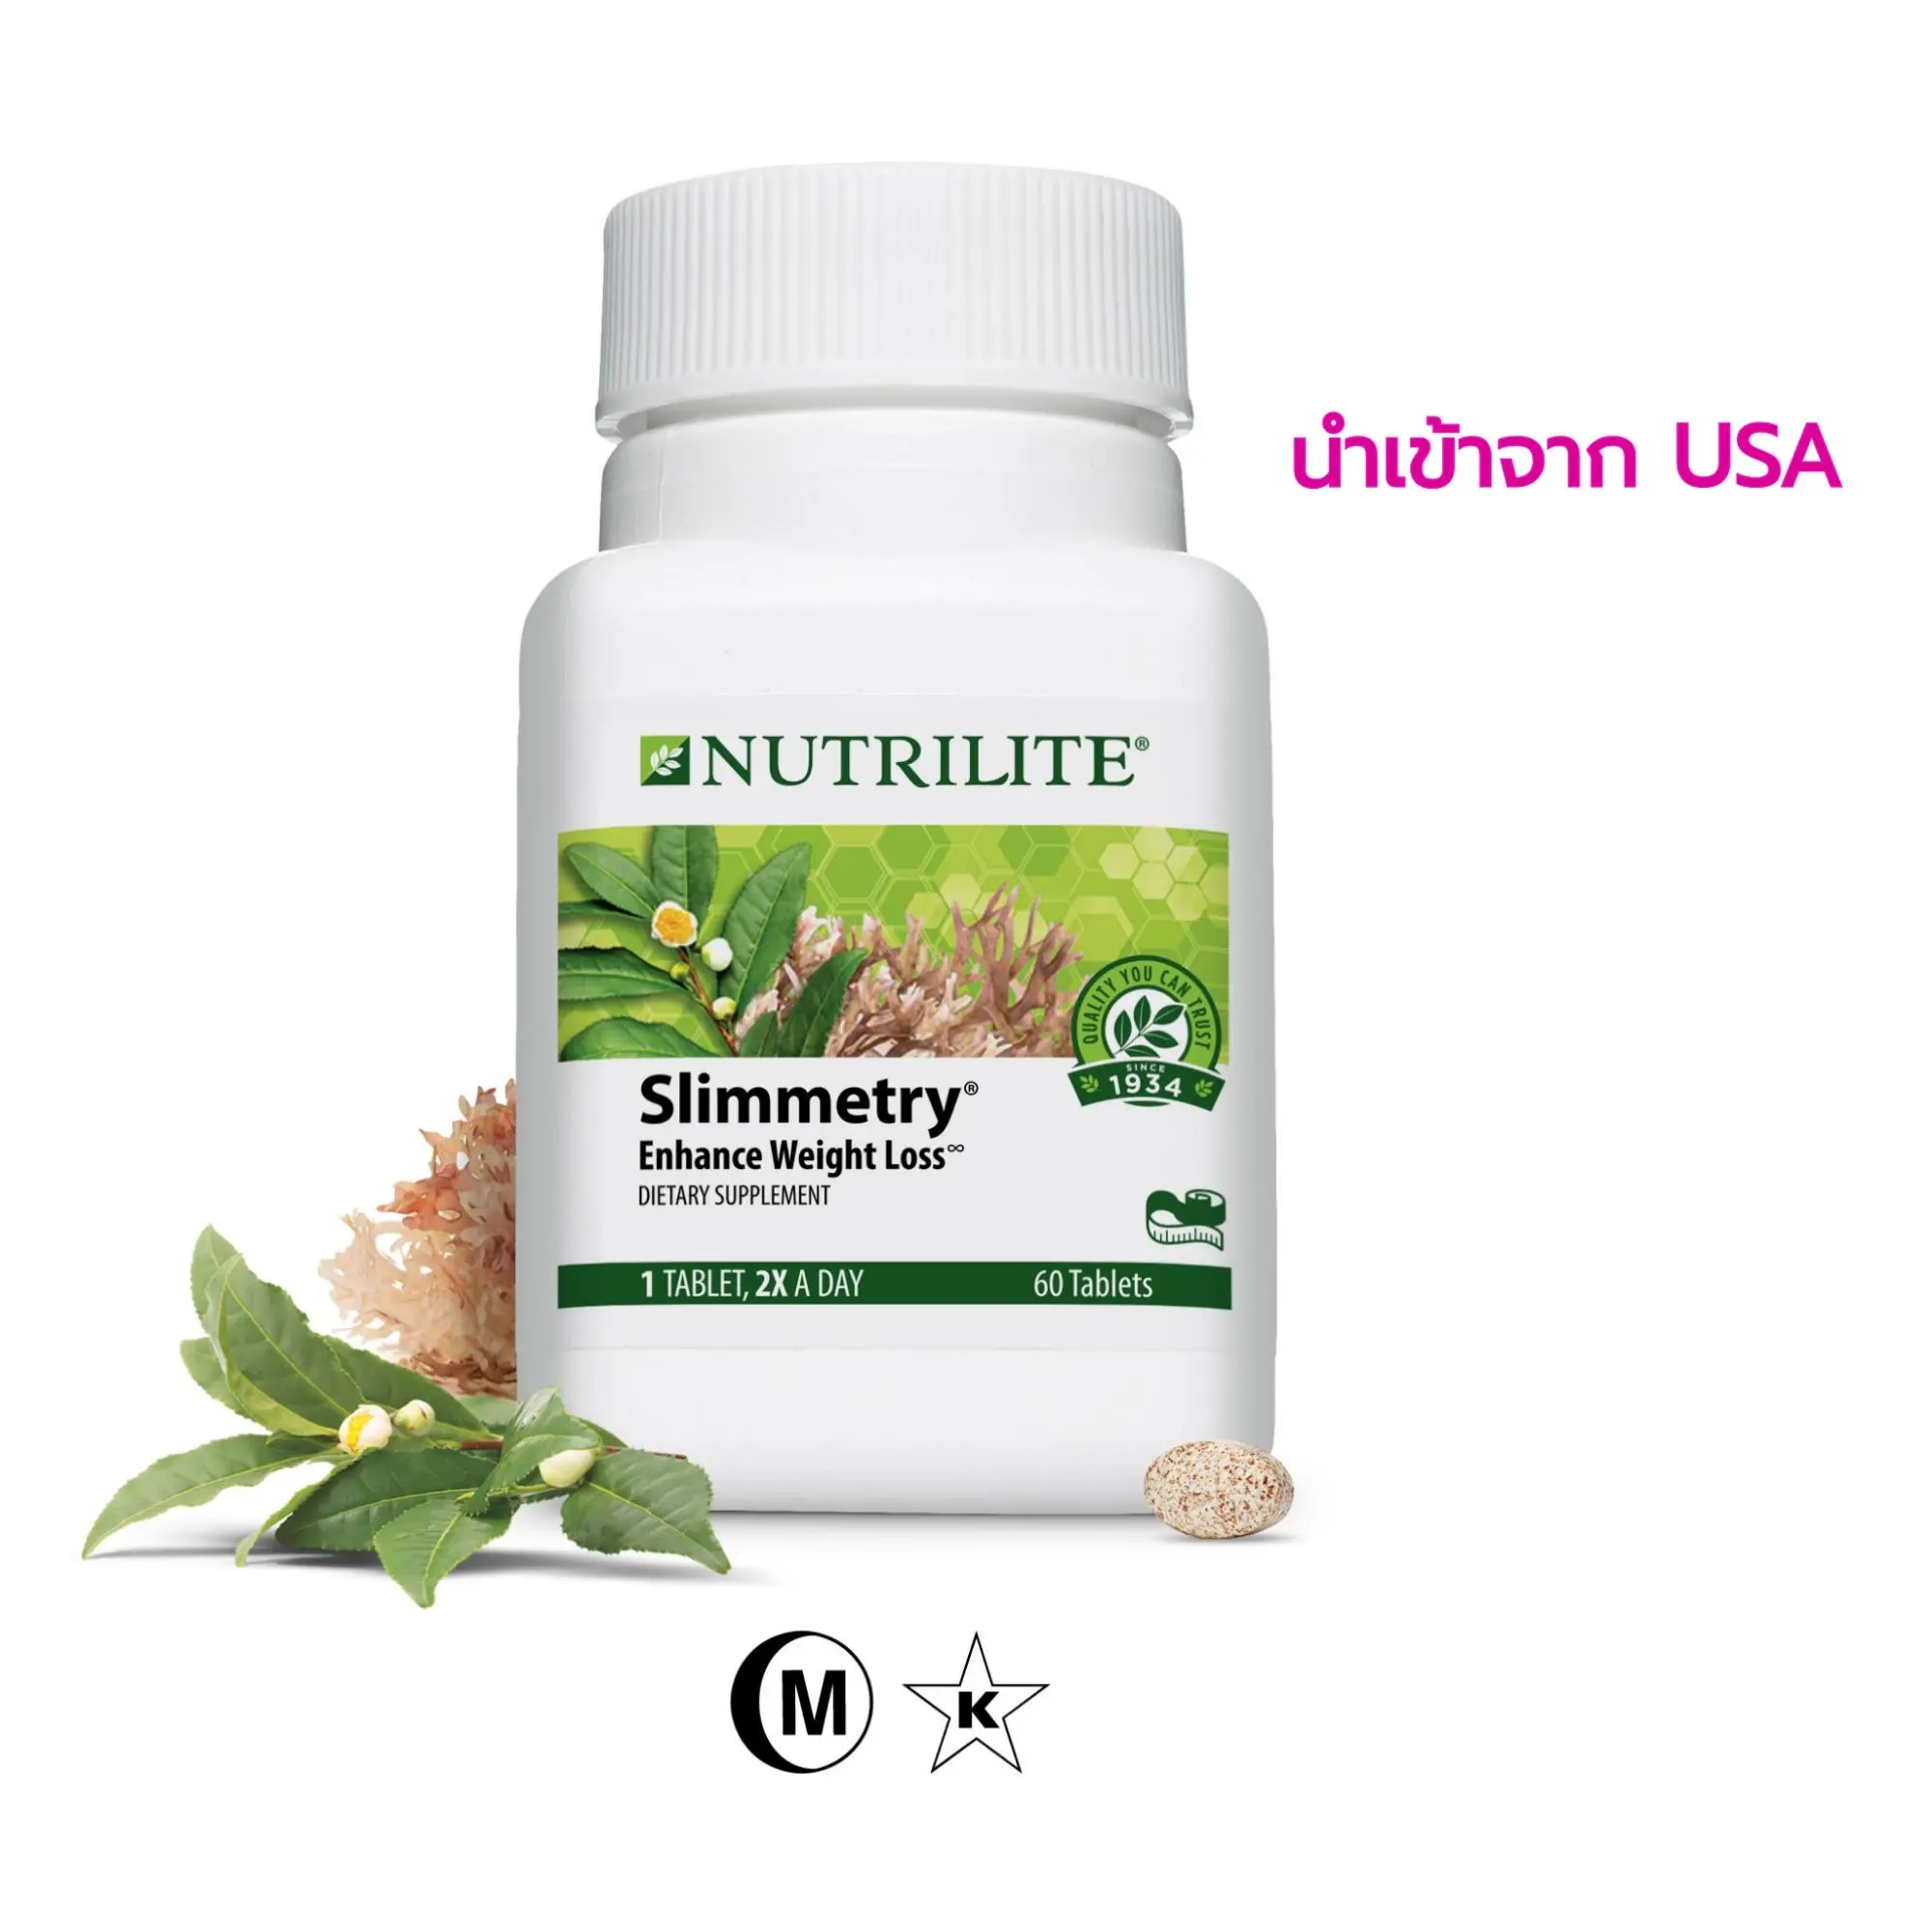 Nutrilite Slimmetry (Green-T Plus) ของแท้จาก USA